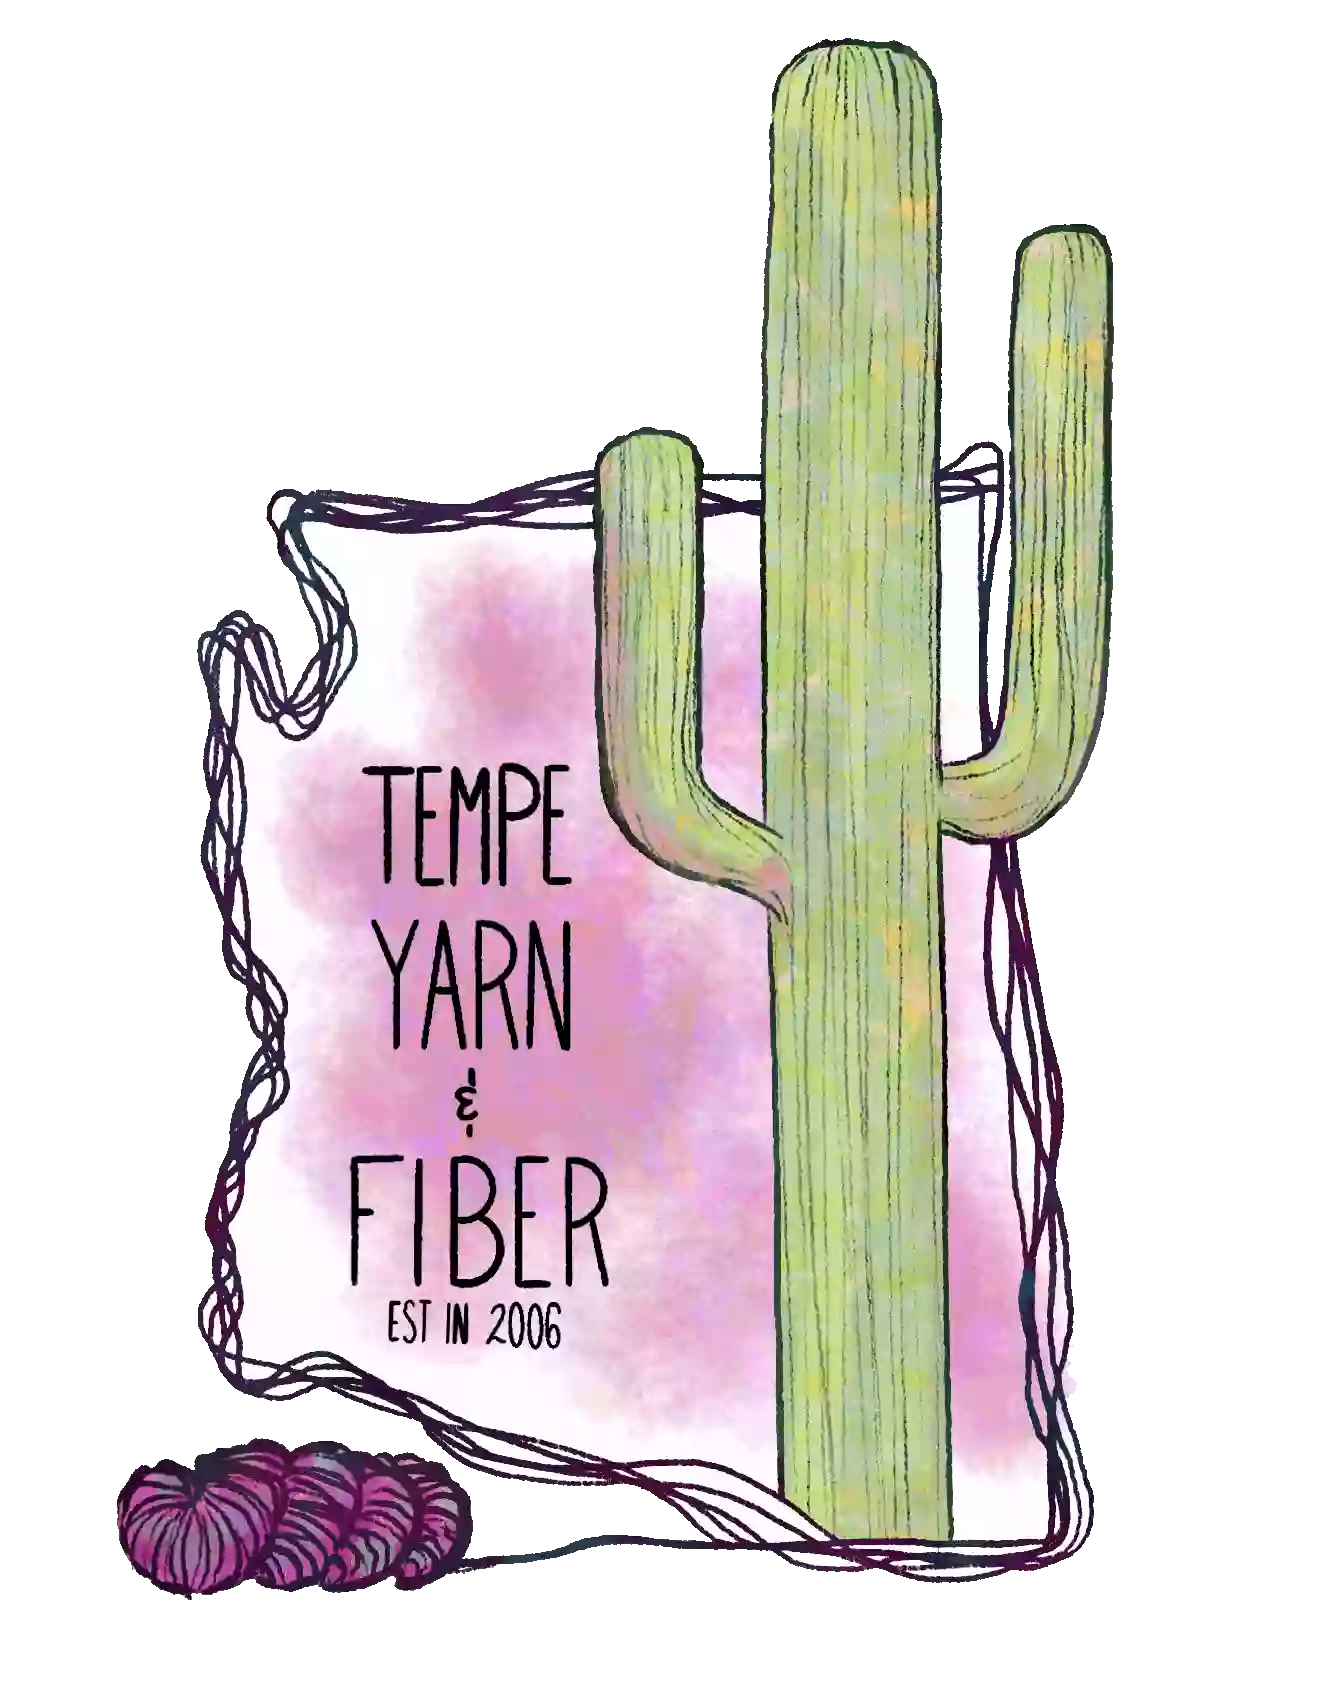 Tempe Yarn & Fiber